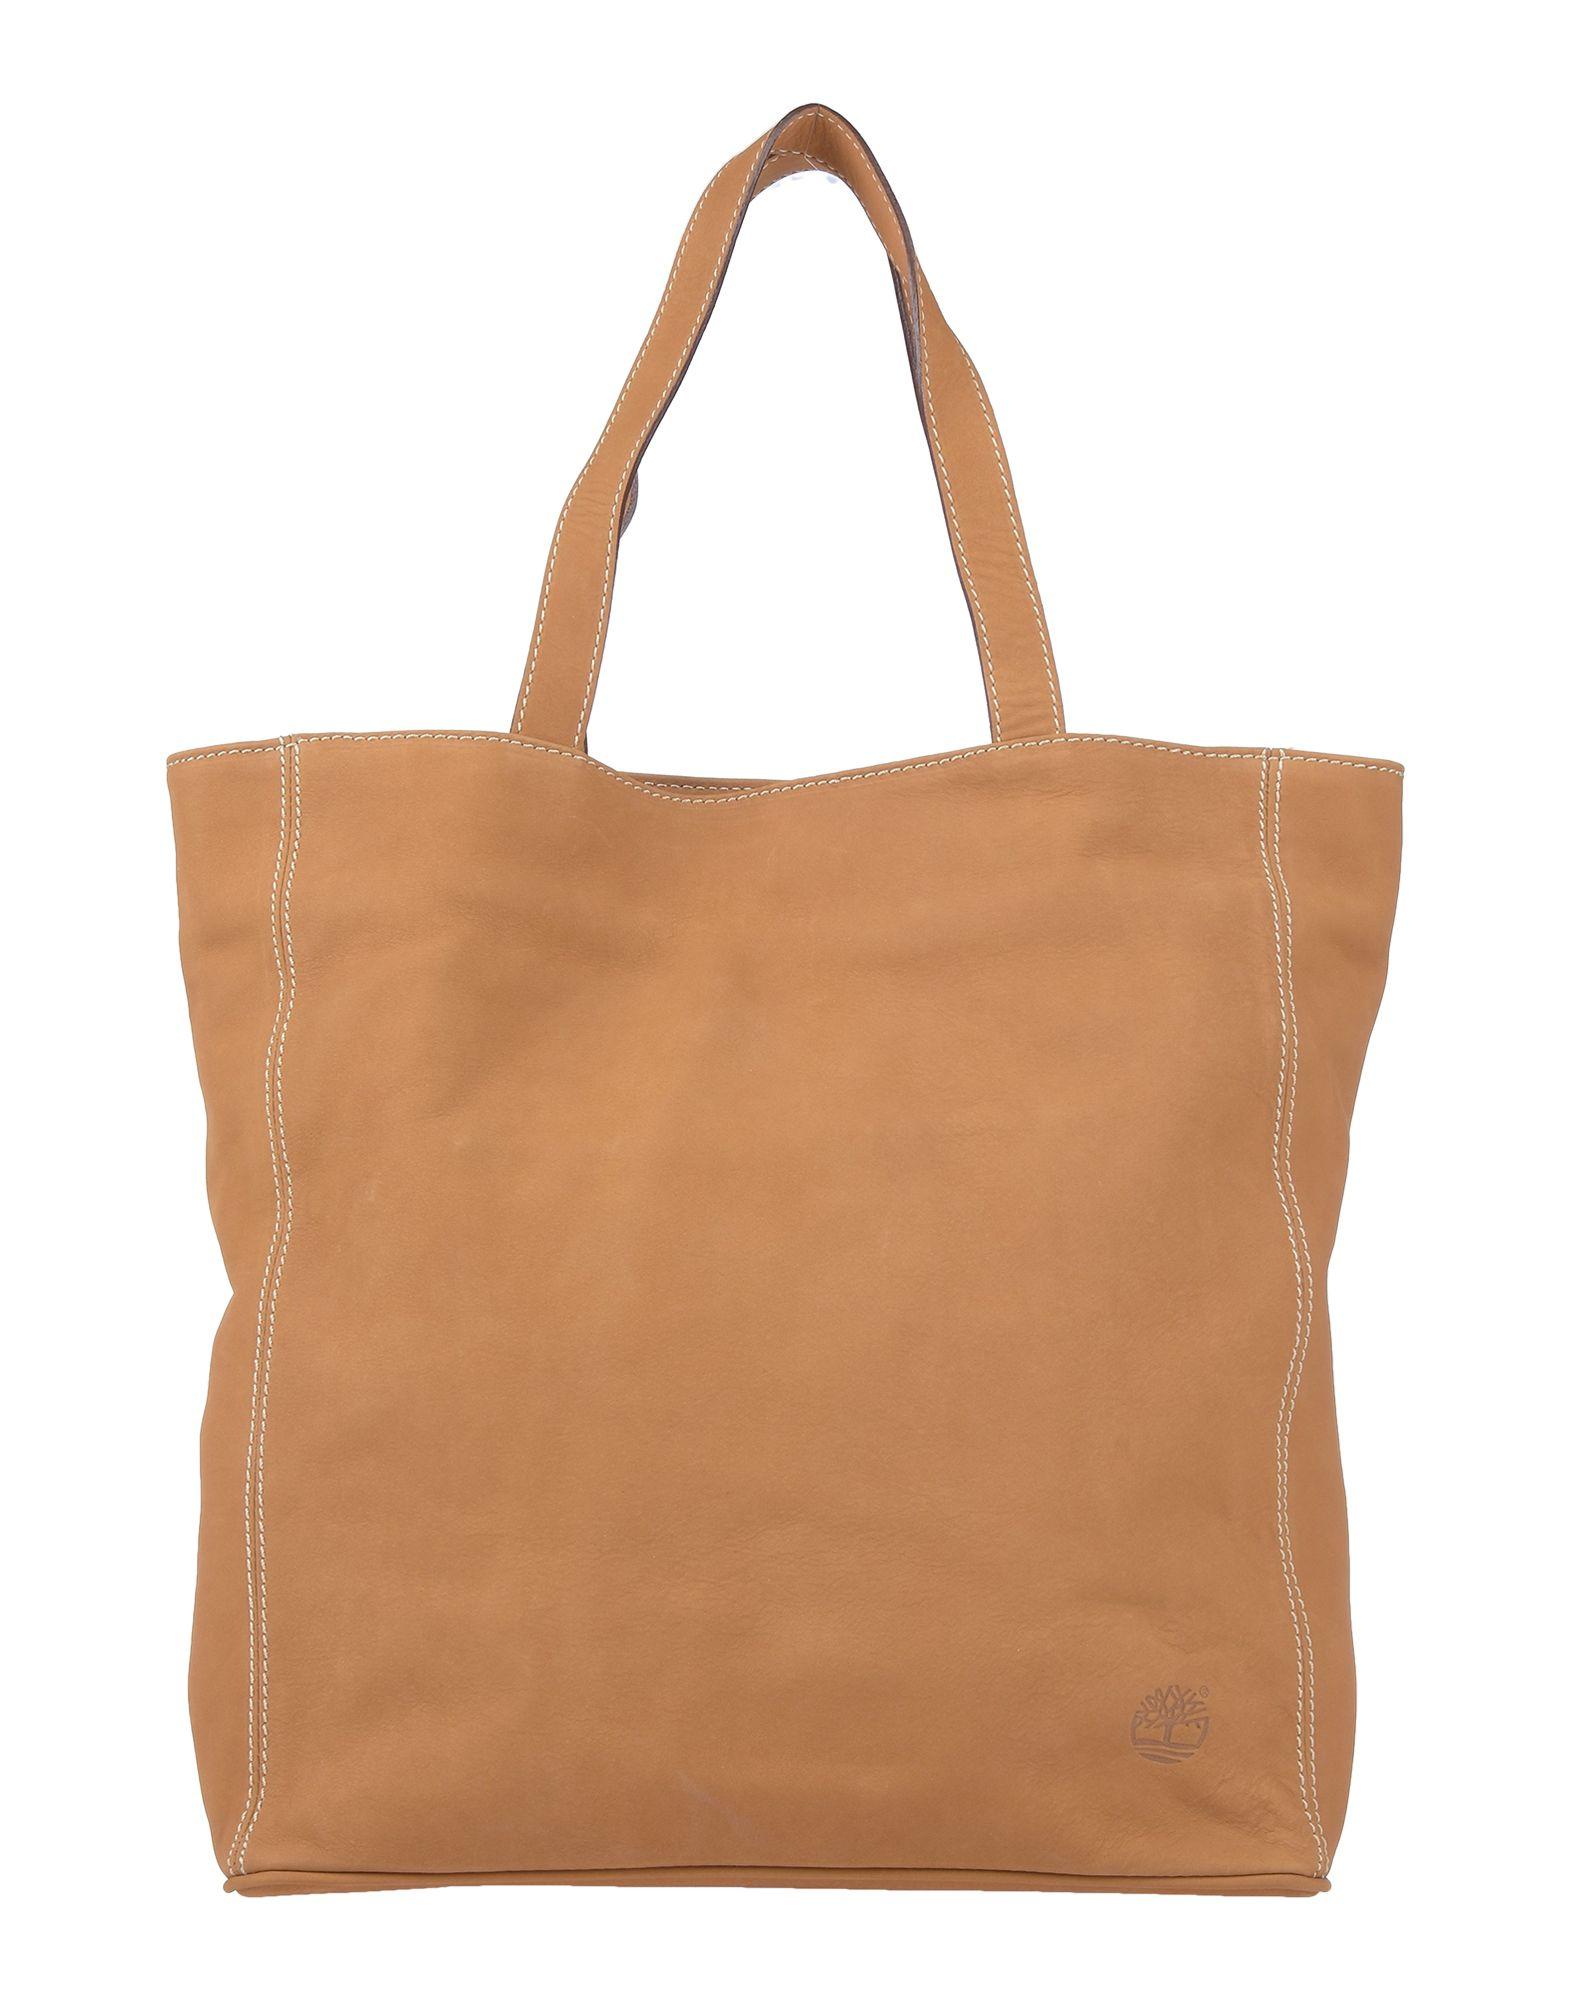 Timberland Leather Handbag in Tan (Brown) - Lyst